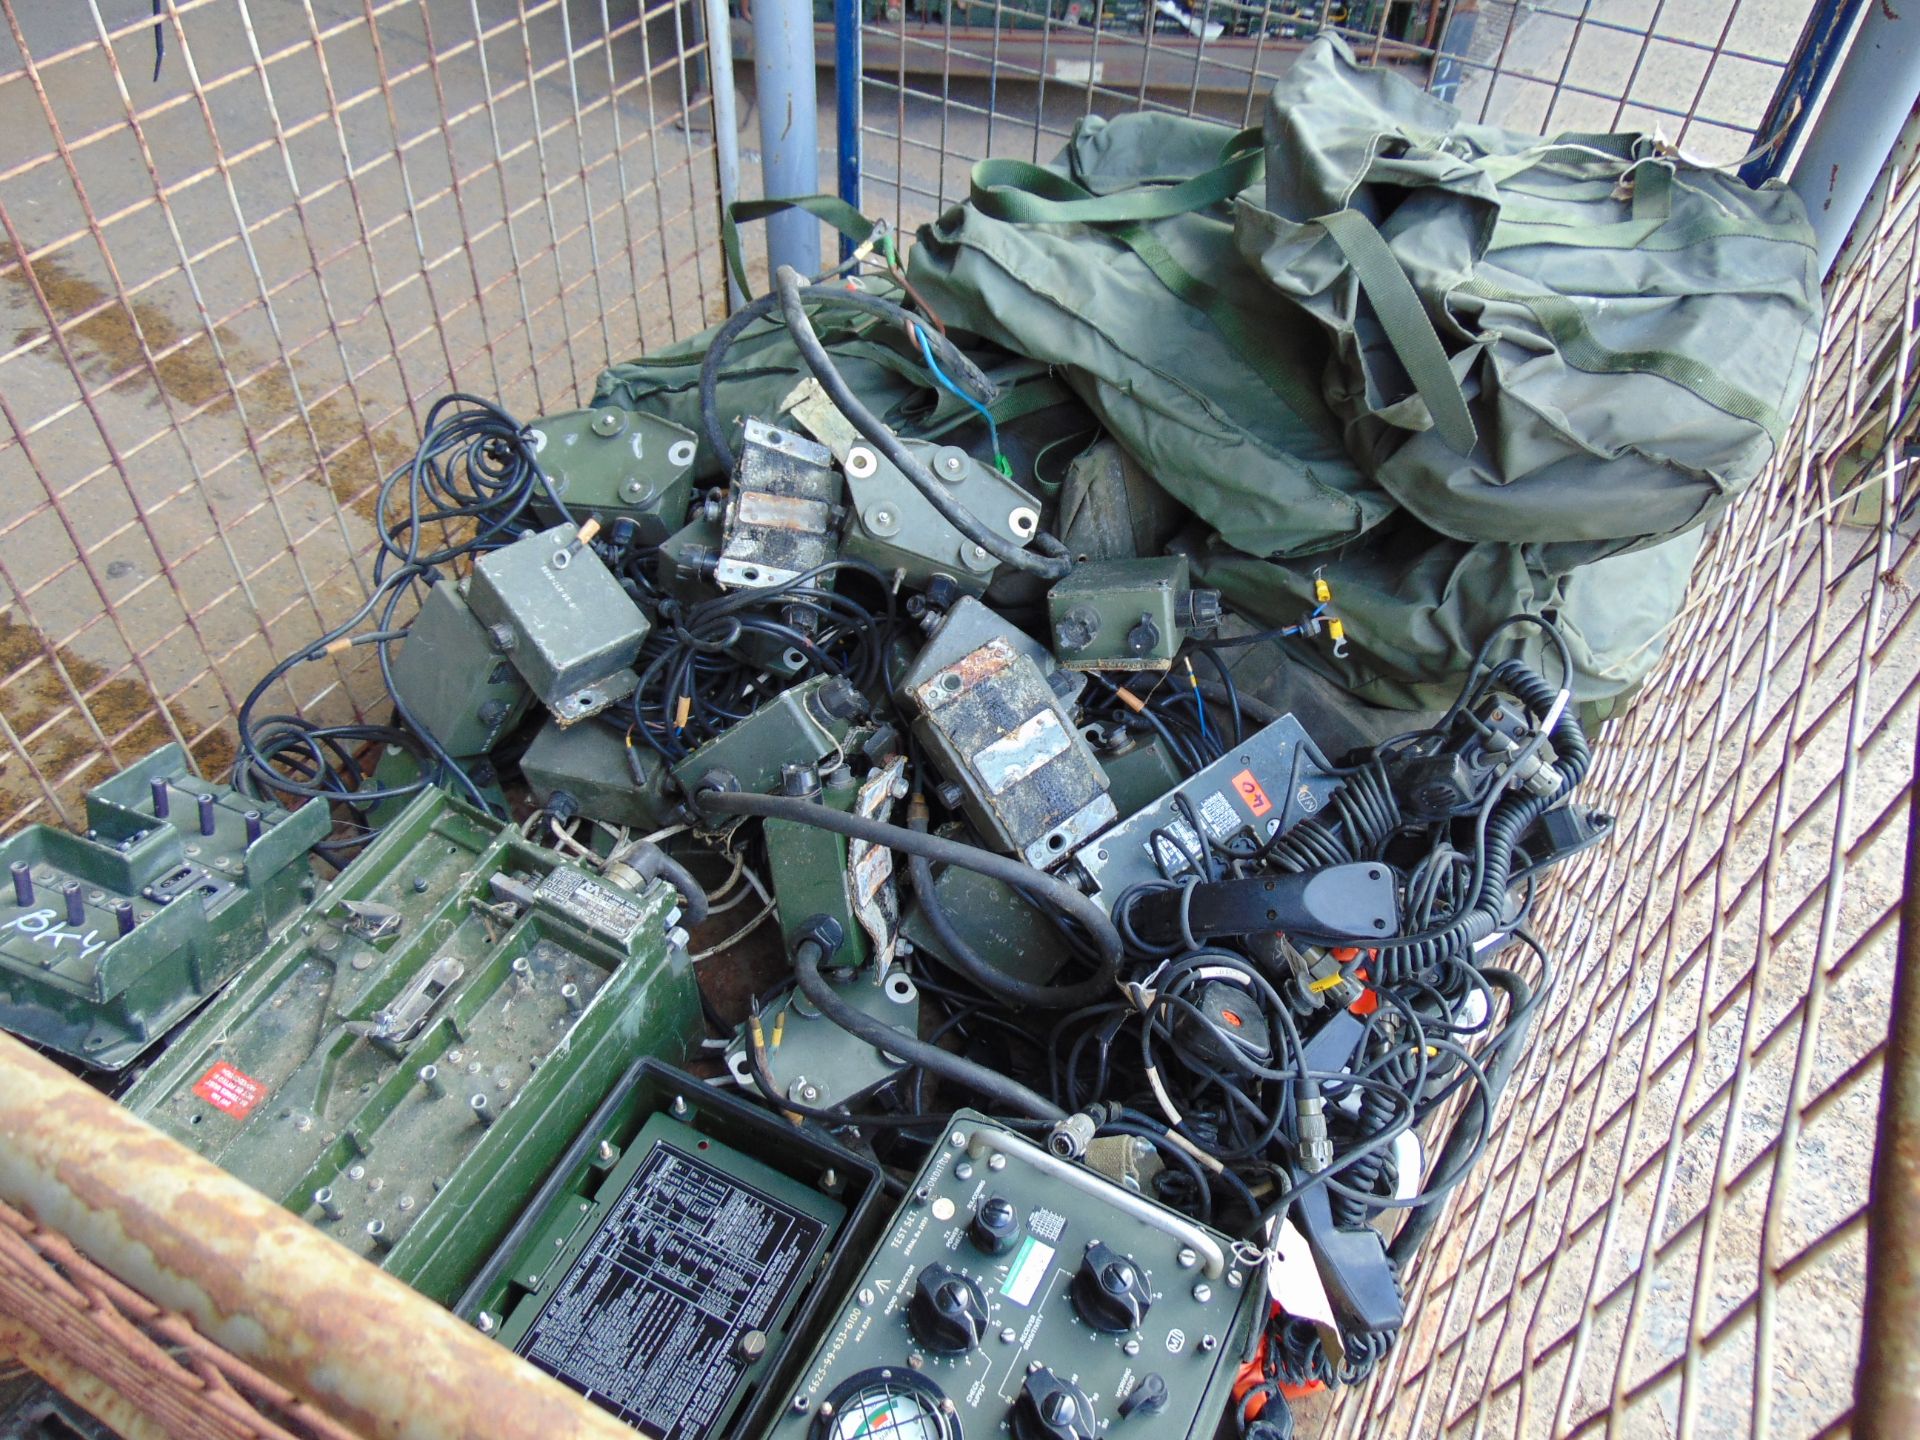 1 x Stillage of Clansman Radio Equipment inc Transmitter, Test Sets, Charger, Cables, Handsets etc - Image 9 of 12